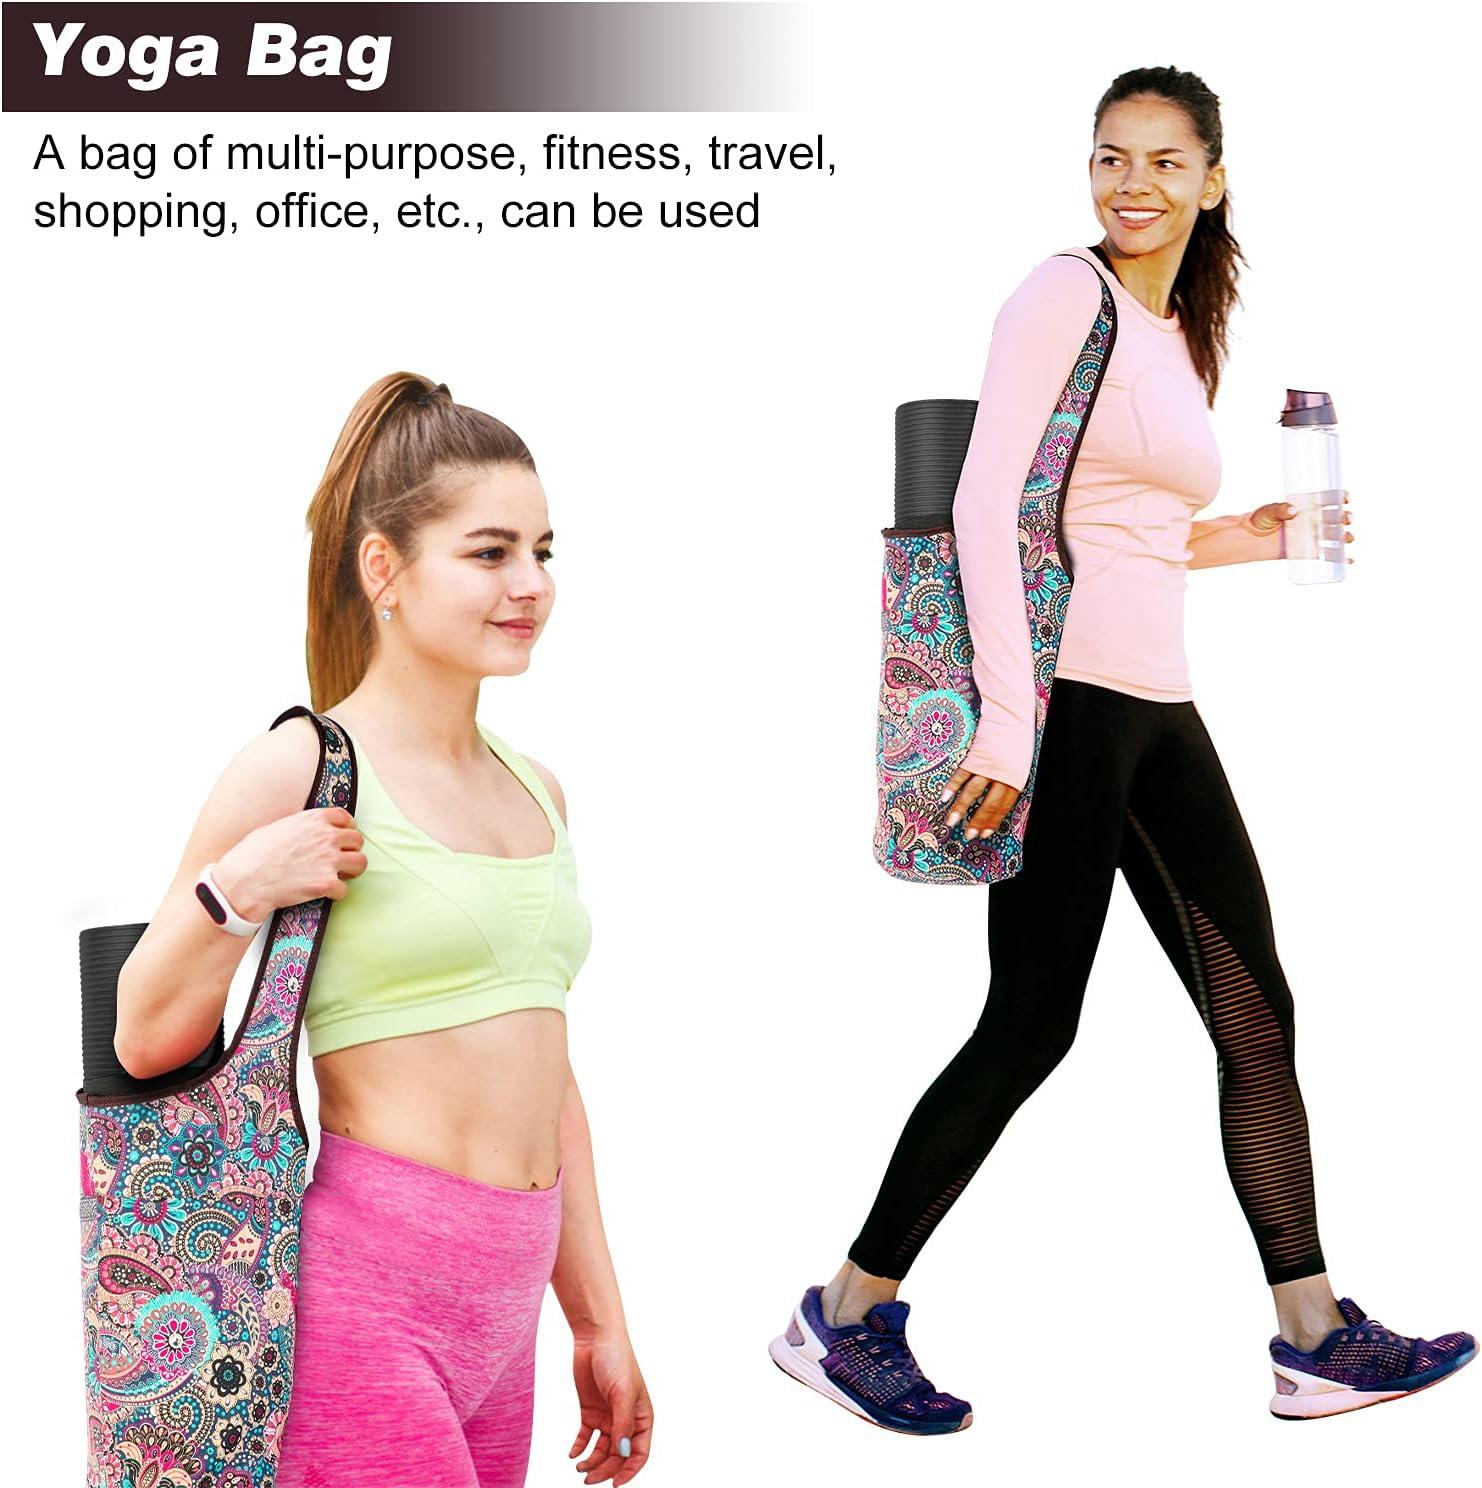 SARHLIO Yoga Mat Bag with Large Size Open Pocket and Inside Zipper Pocket Yoga  Mat Carrier Bag Fit Most Size Mats Yoga Bag for Women Men Easy Access  Lightweight Comfortable Shoulder Strap